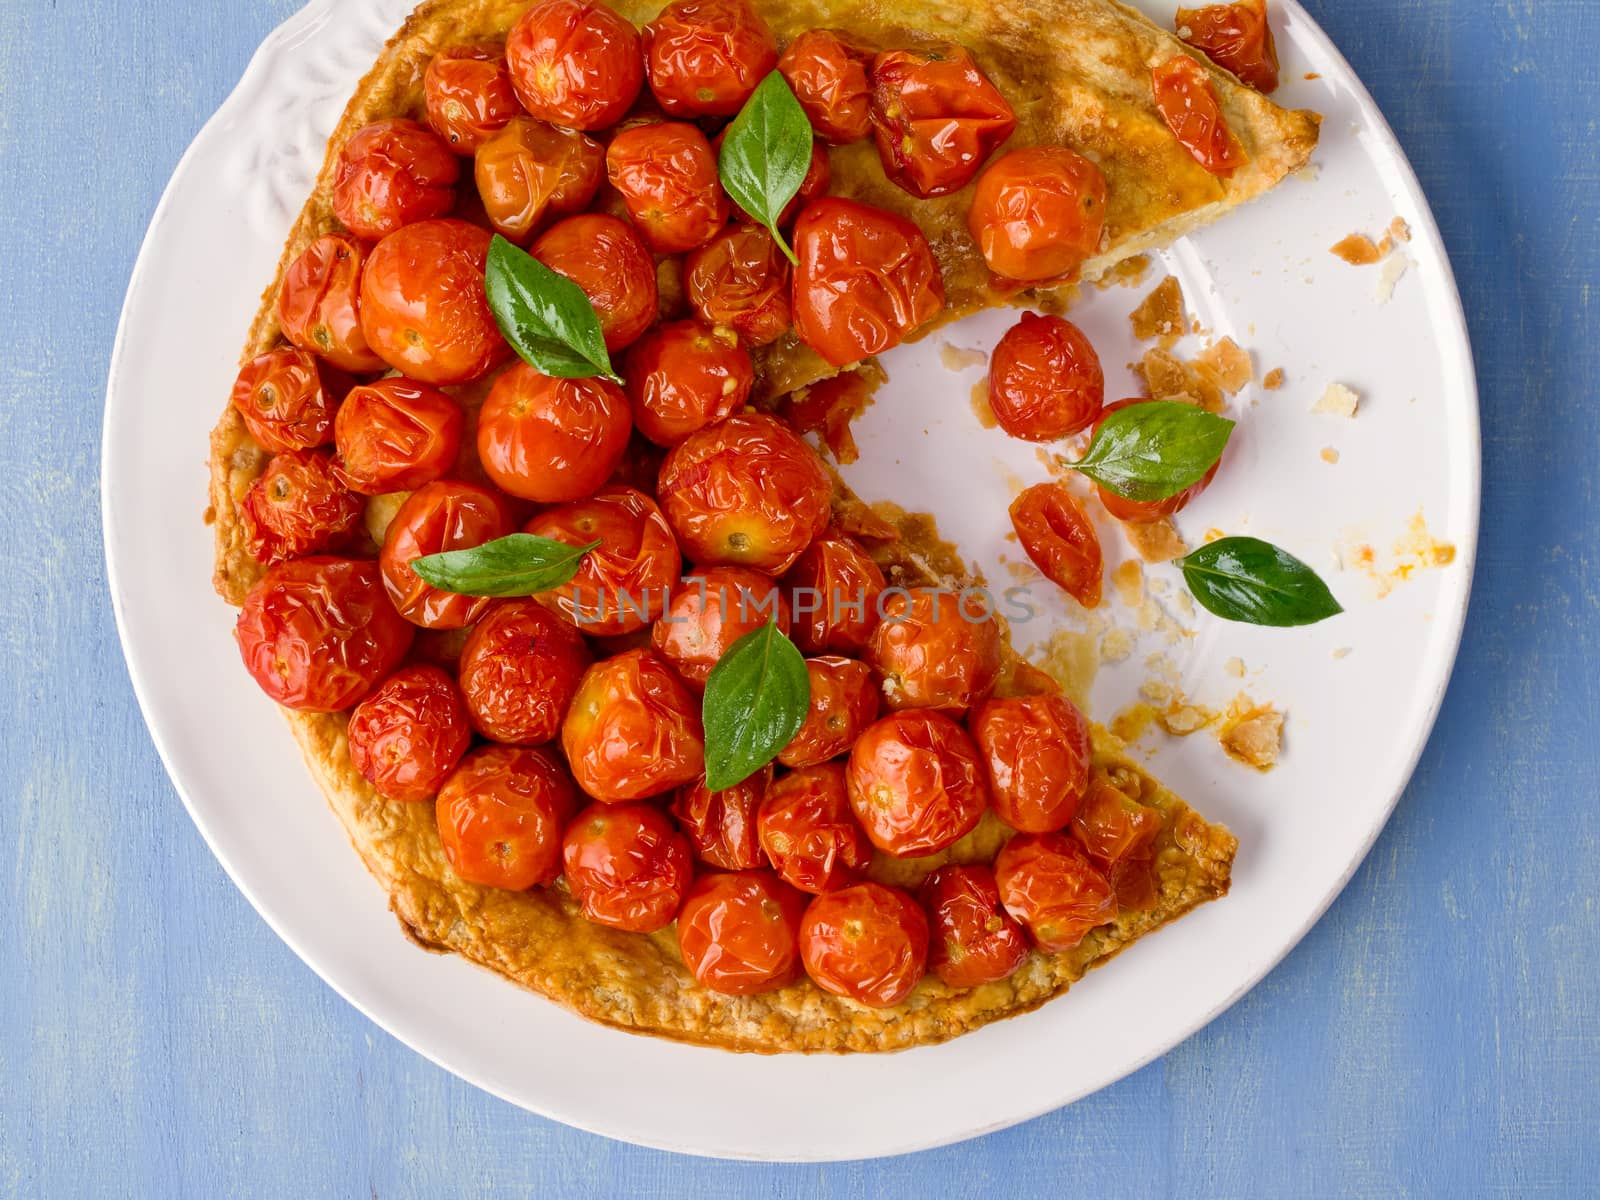 close up of rustic cherry tomato tarte tatin